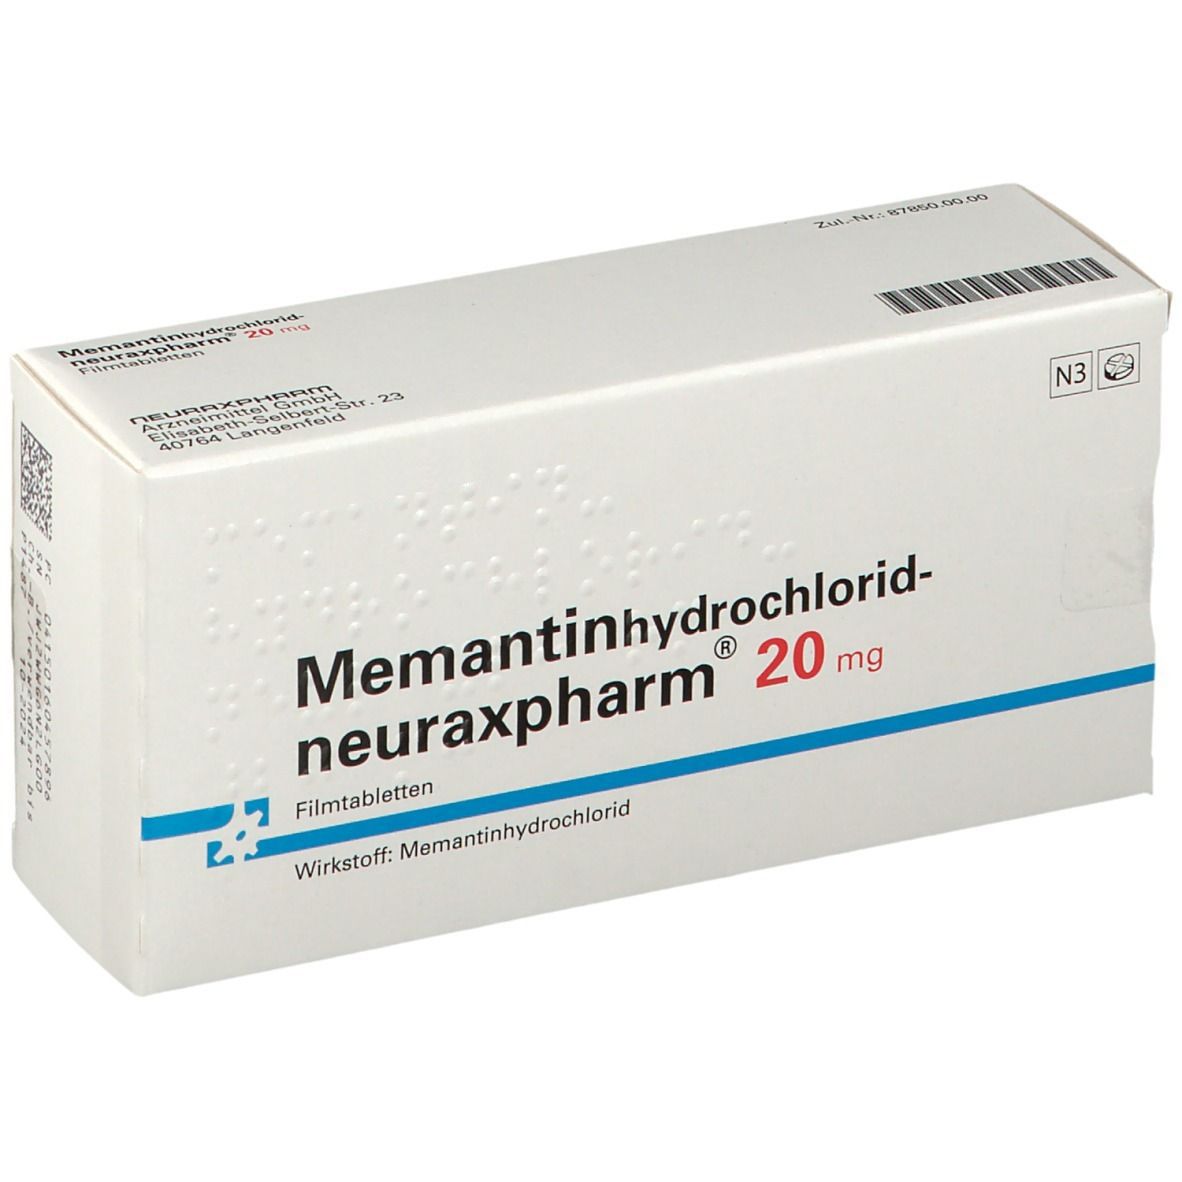 Memantinhydrochlorid-neuraxpharm® 20 mg